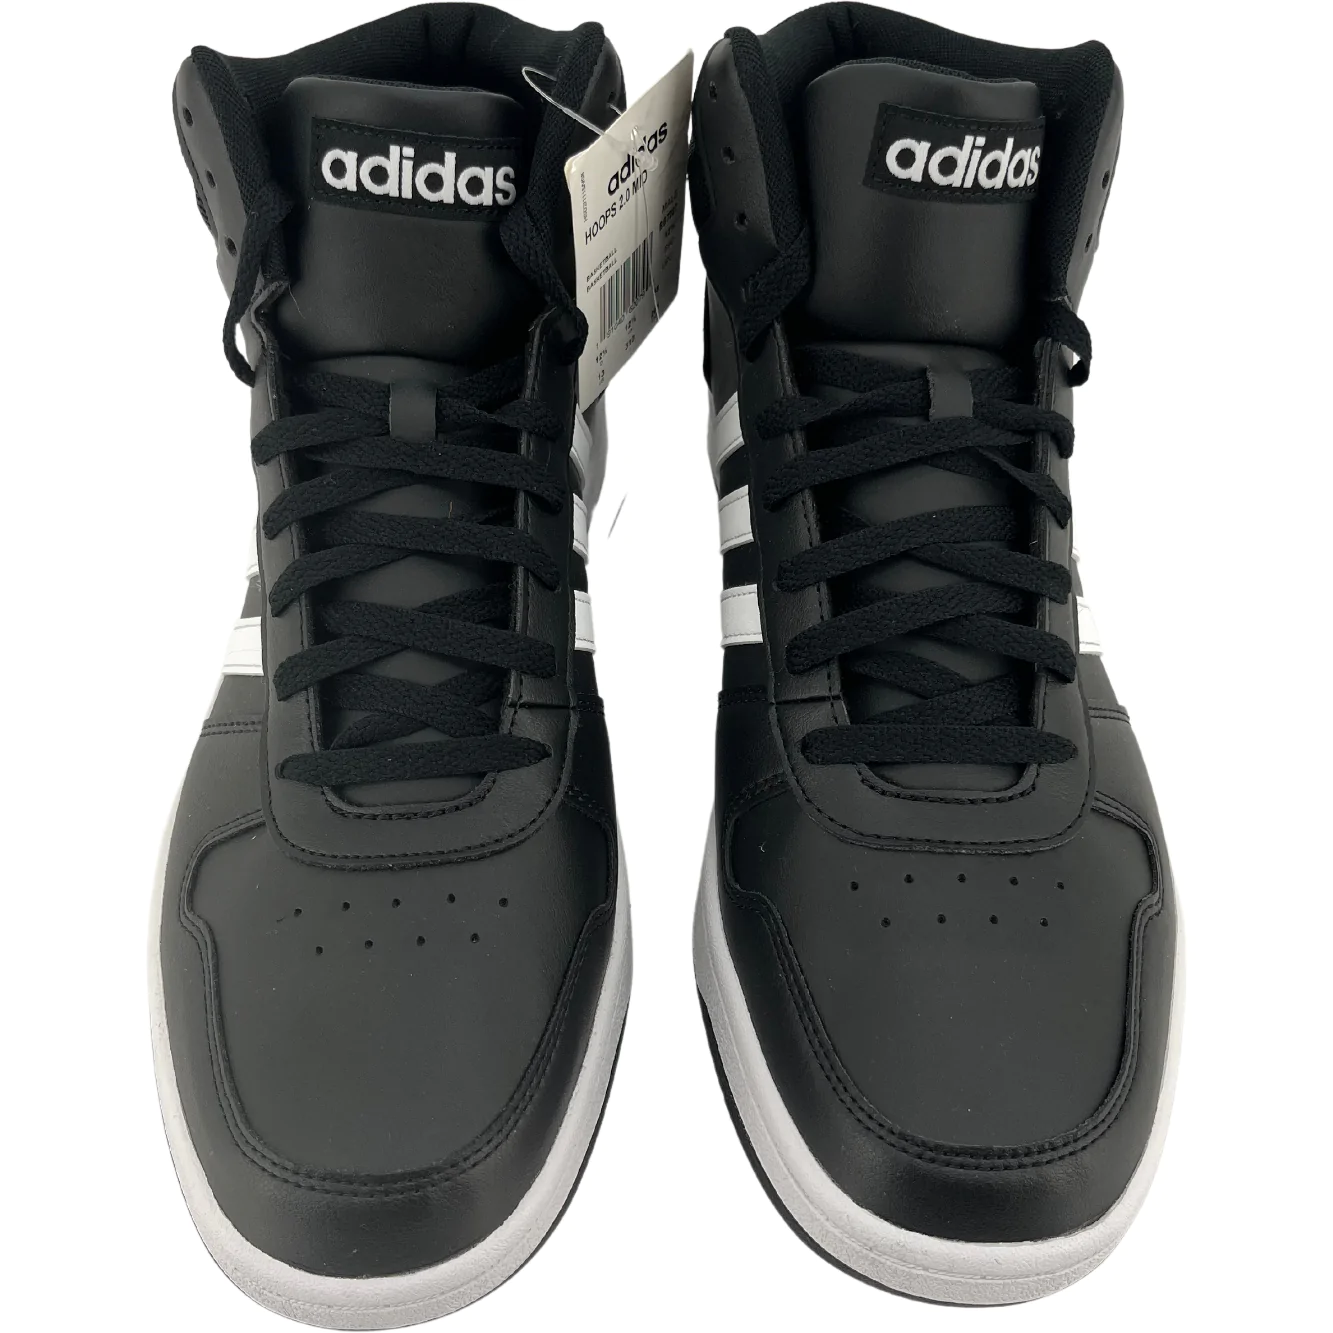 Adidas Men's Shoes / Hoops 2.0 Mid / Black / Basketball Shoe / Size 13